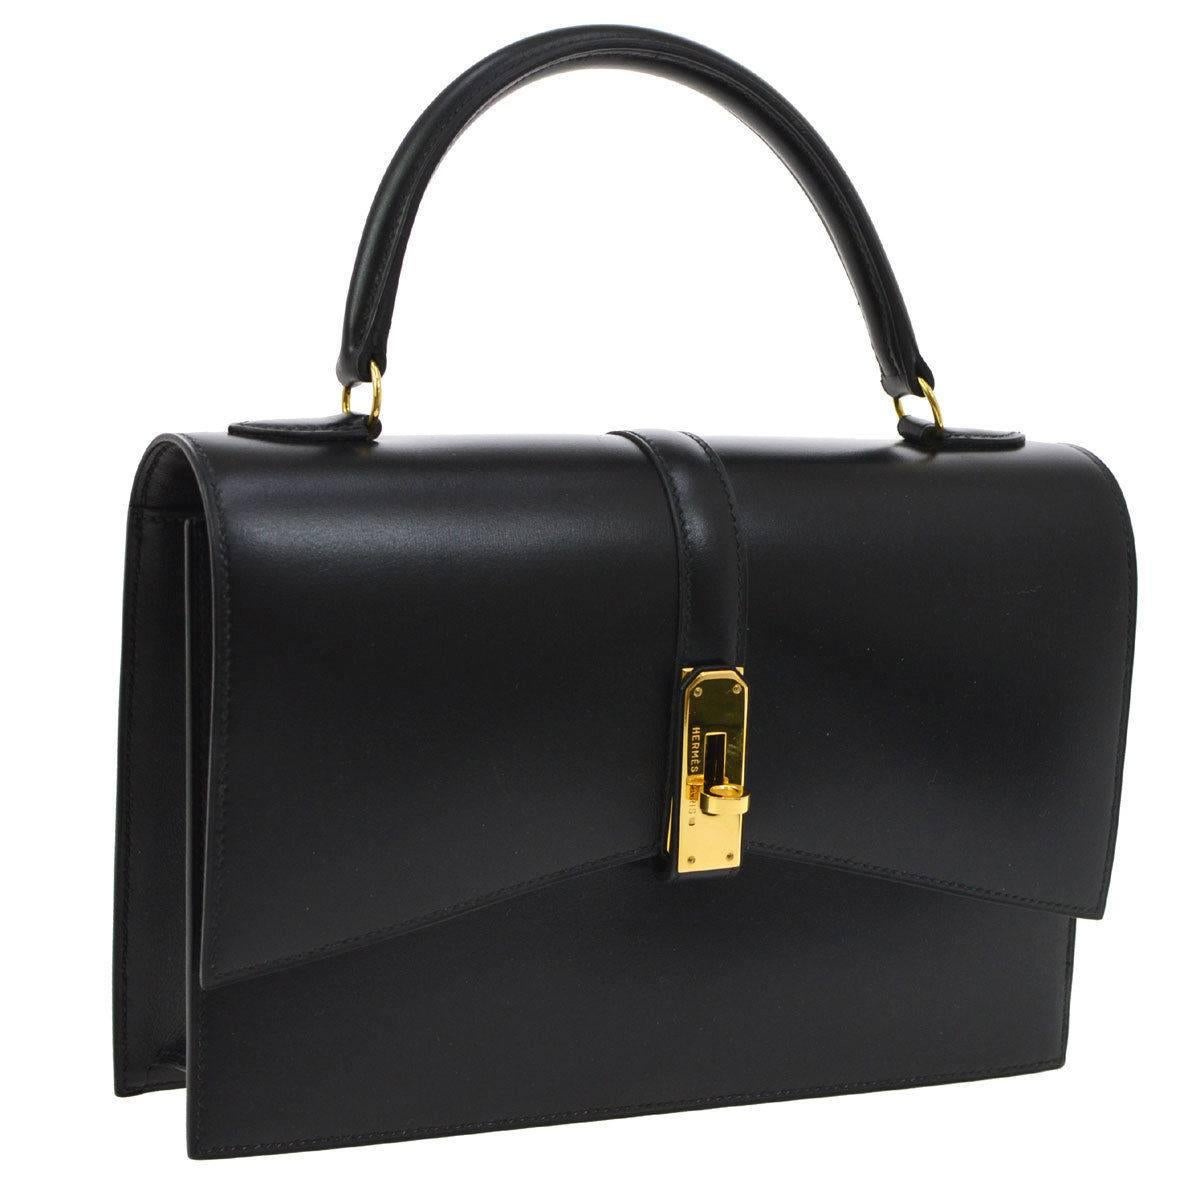 Hermes Black Leather Gold Kelly Style Flip Lock Top Handle Satchel Bag in Box